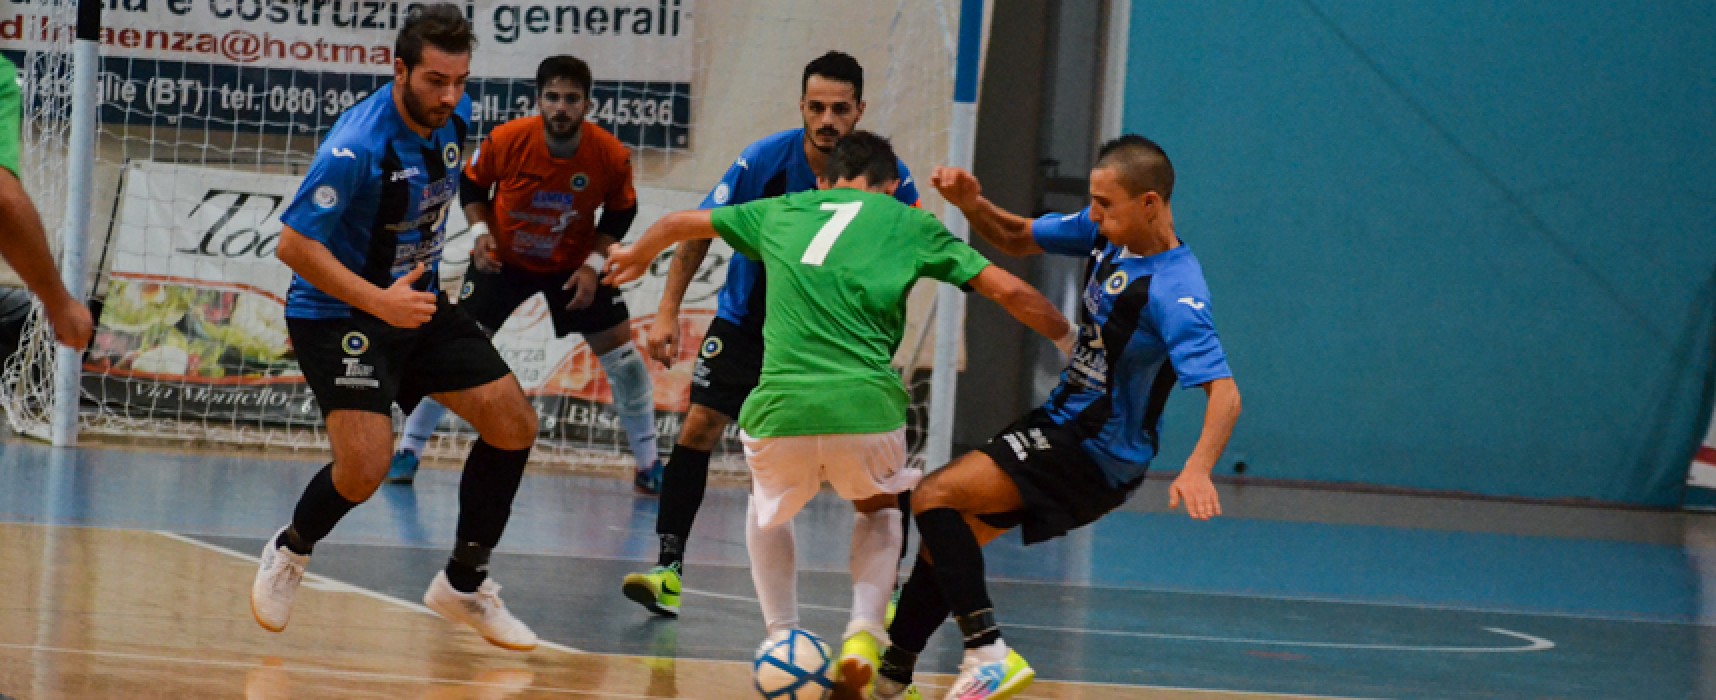 FINALE: Futsal Bisceglie-Conversano 7-3